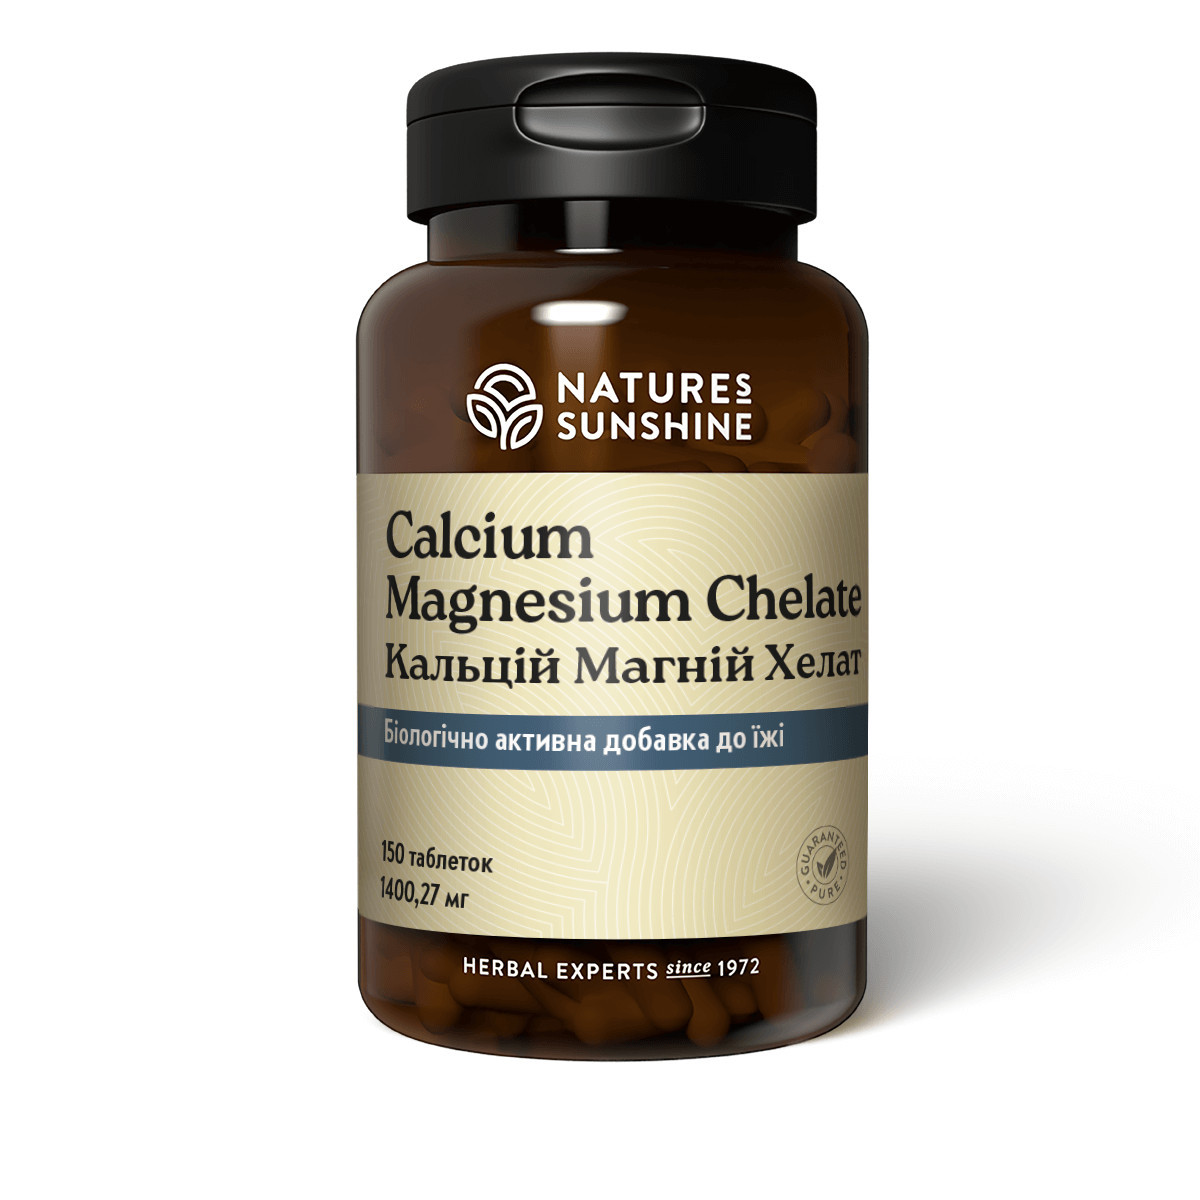 Кальцій Магній Хелат, Calcium Magnesium Chelate, 150 таблеток, Nature's Sunshine Products, США